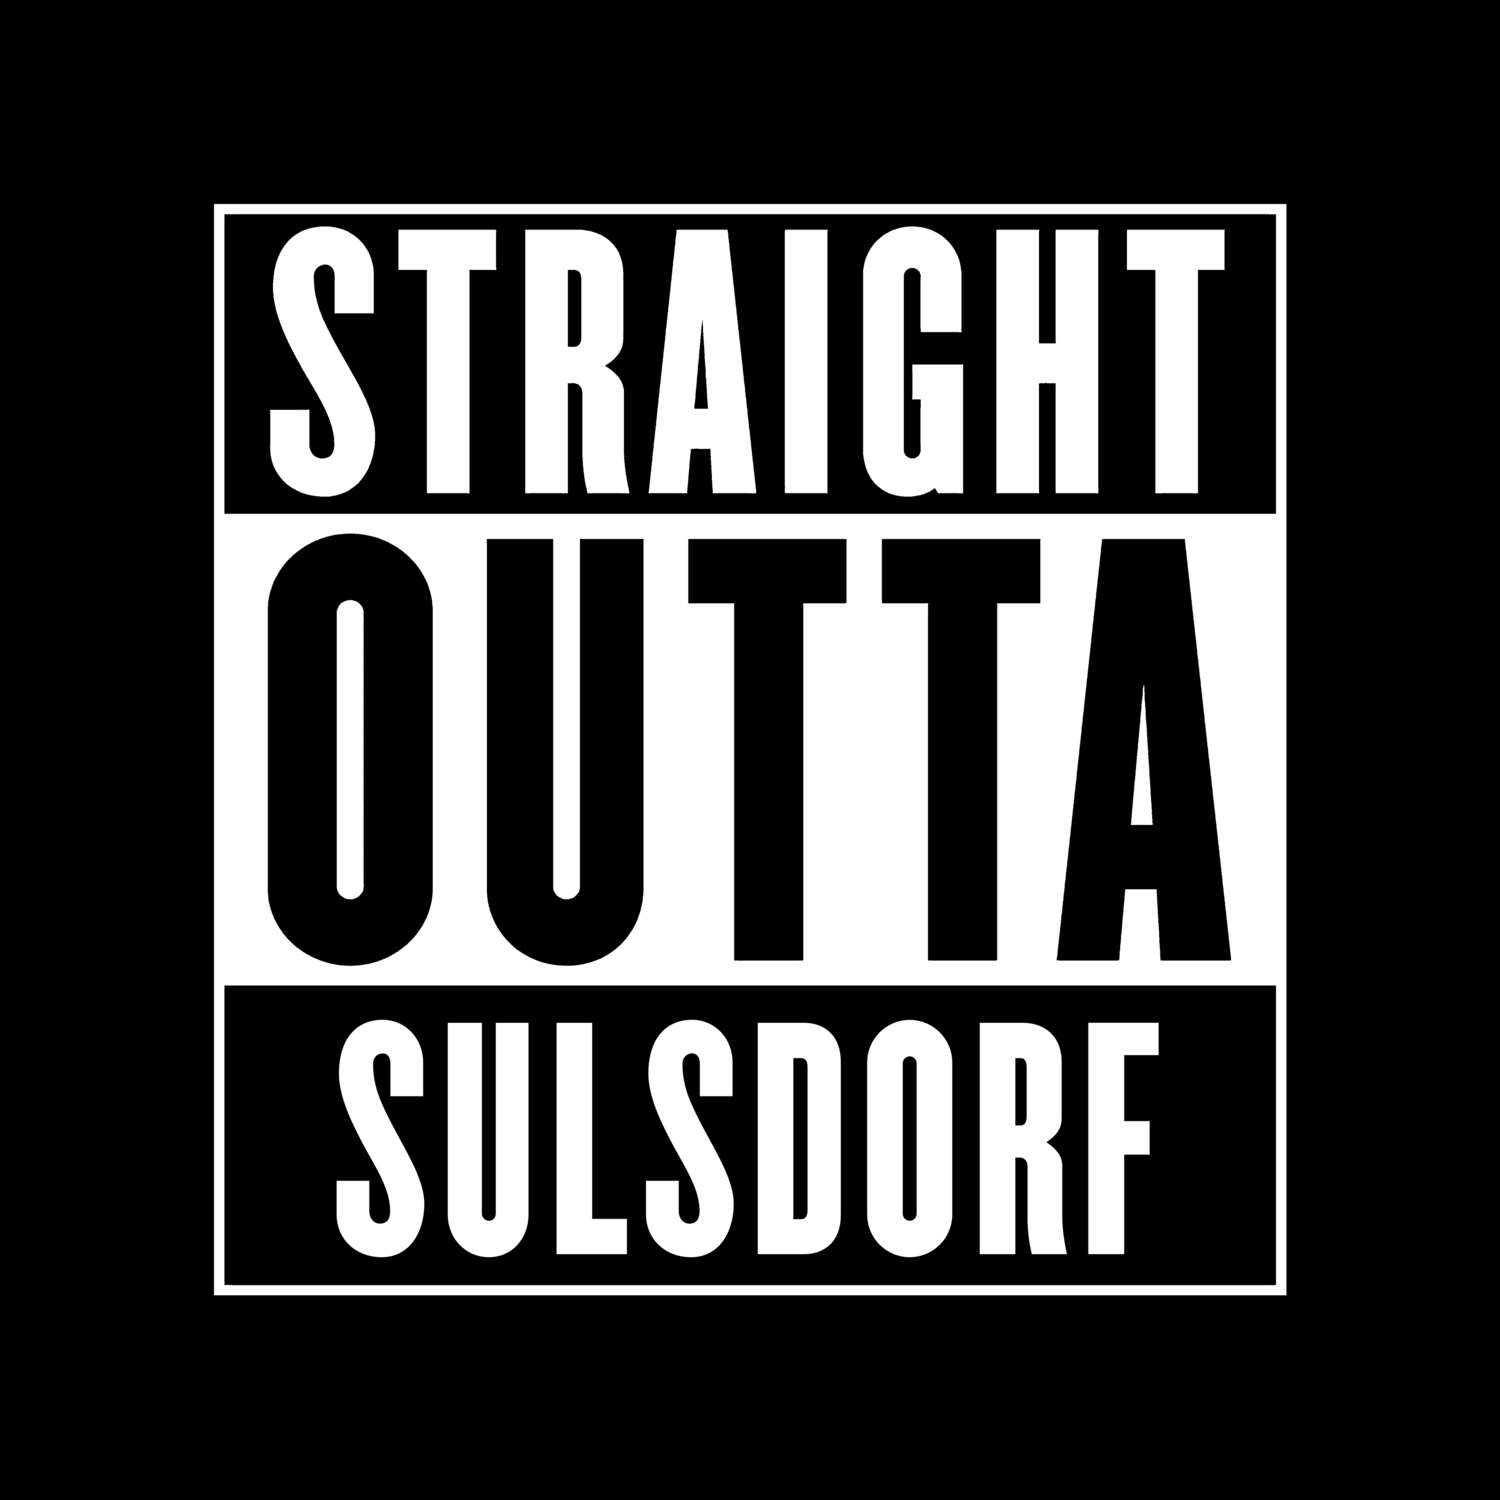 Sulsdorf T-Shirt »Straight Outta«